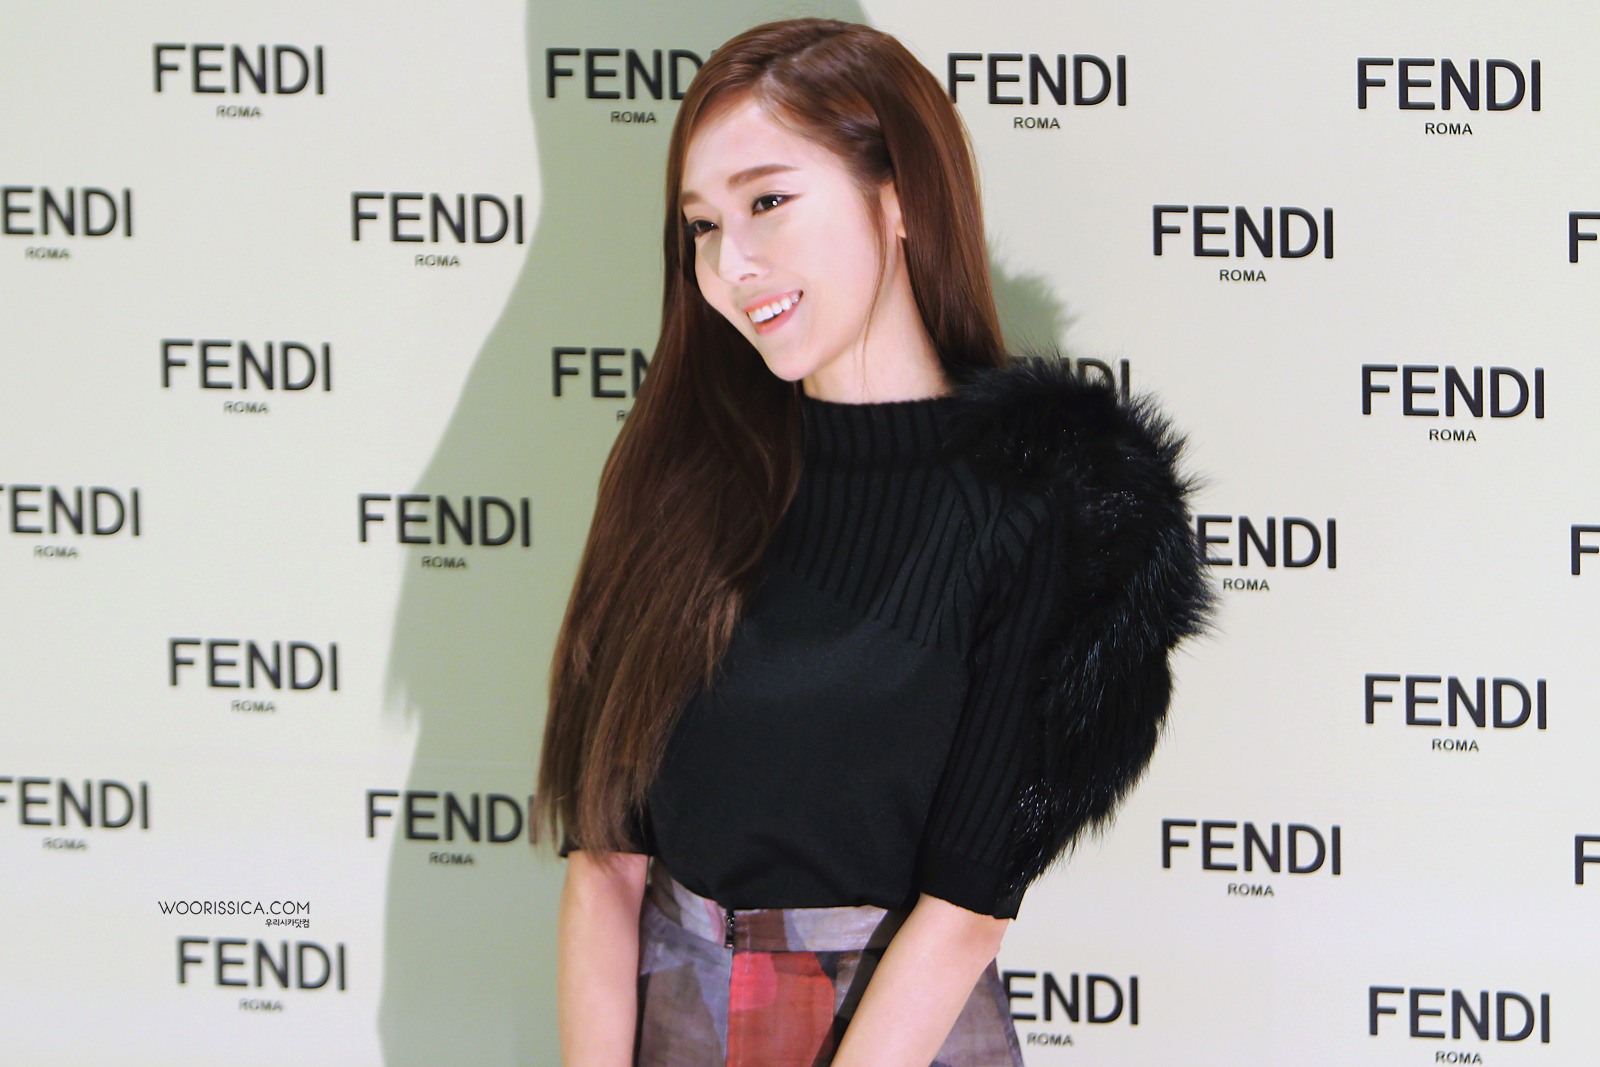 [PIC][24-11-2014]Jessica tham dự sự kiện khai trương cửa hàng "Fendi" tại Lotte World - Seoul vào chiều nay 233E5E425475E5111AA5C5